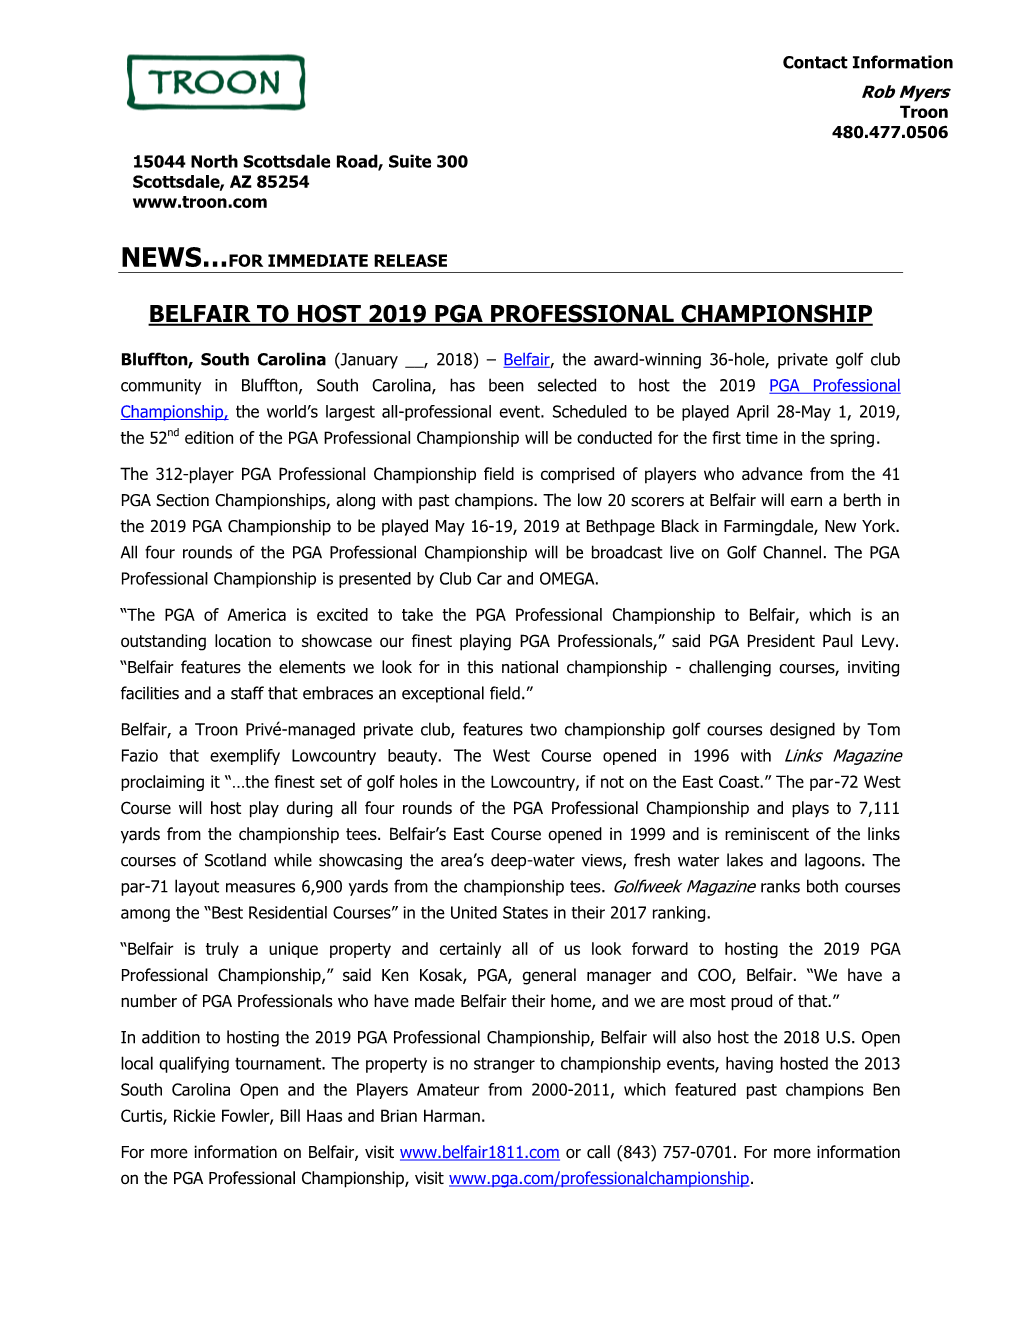 Belfair to Host 2019 Pga Professional Championship